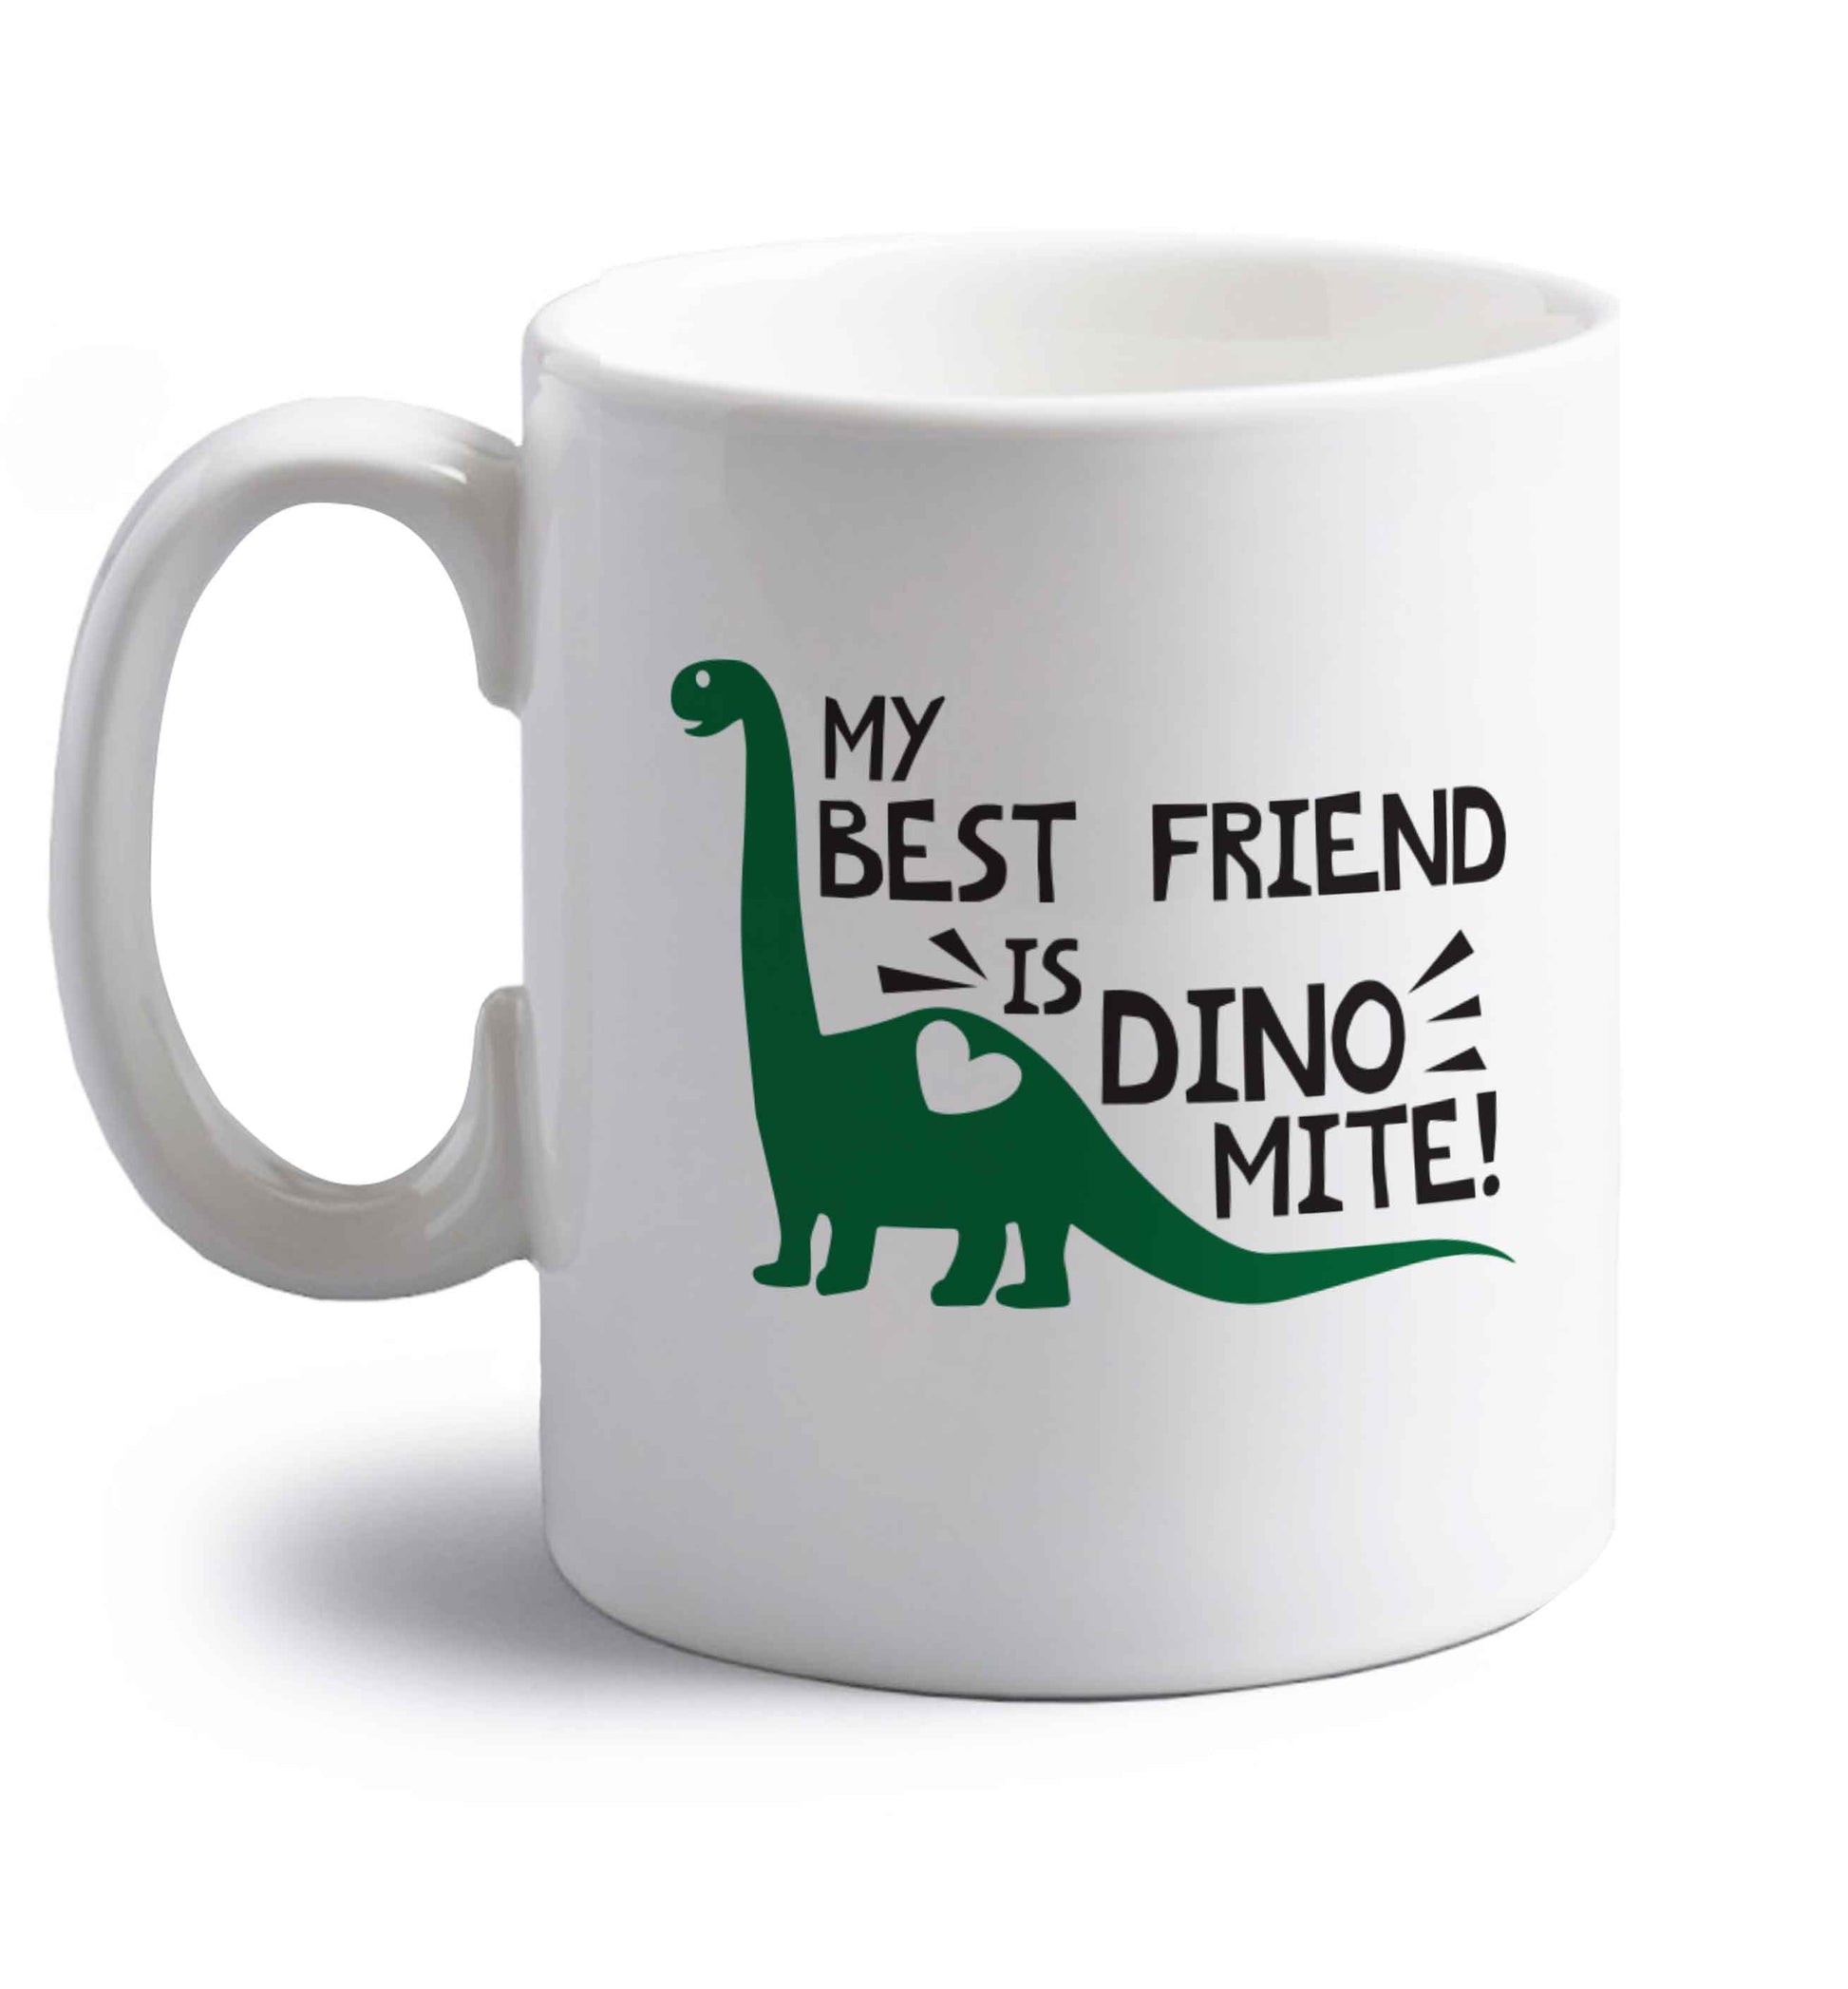 My best friend is dinomite! right handed white ceramic mug 